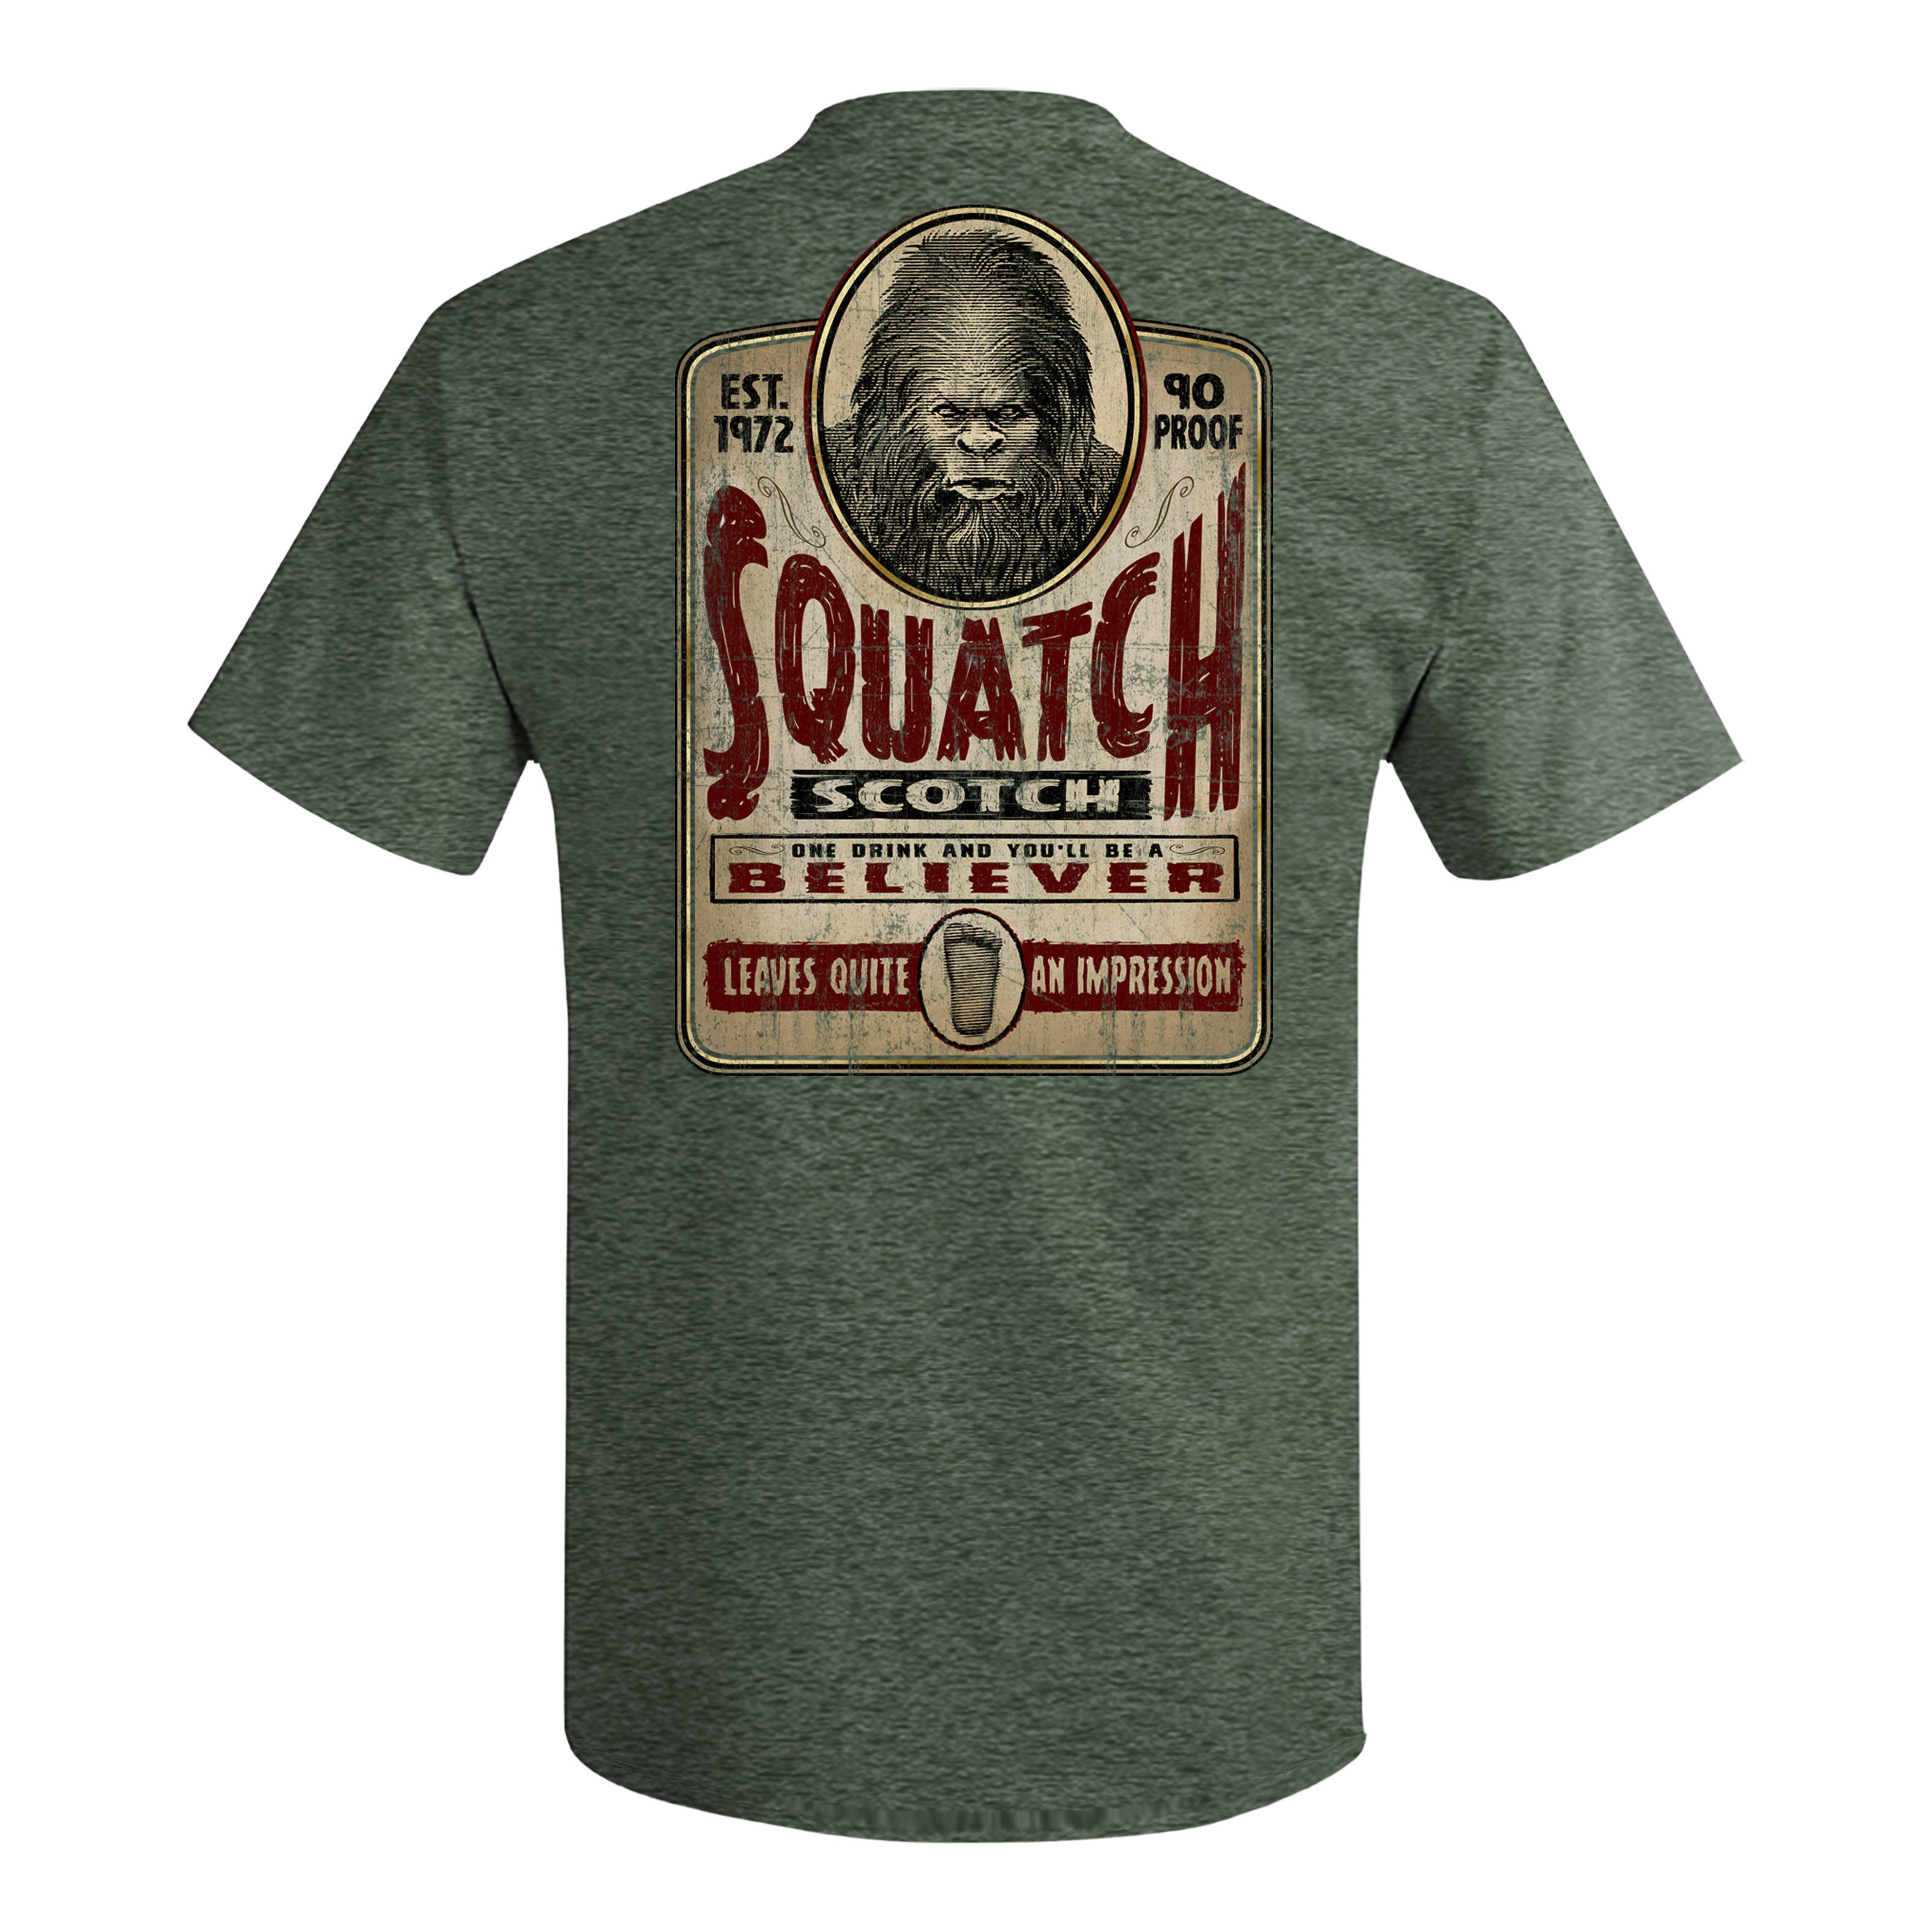 Bass Pro Shops Men's Squatch Scotch Logo Short-Sleeve T-Shirt